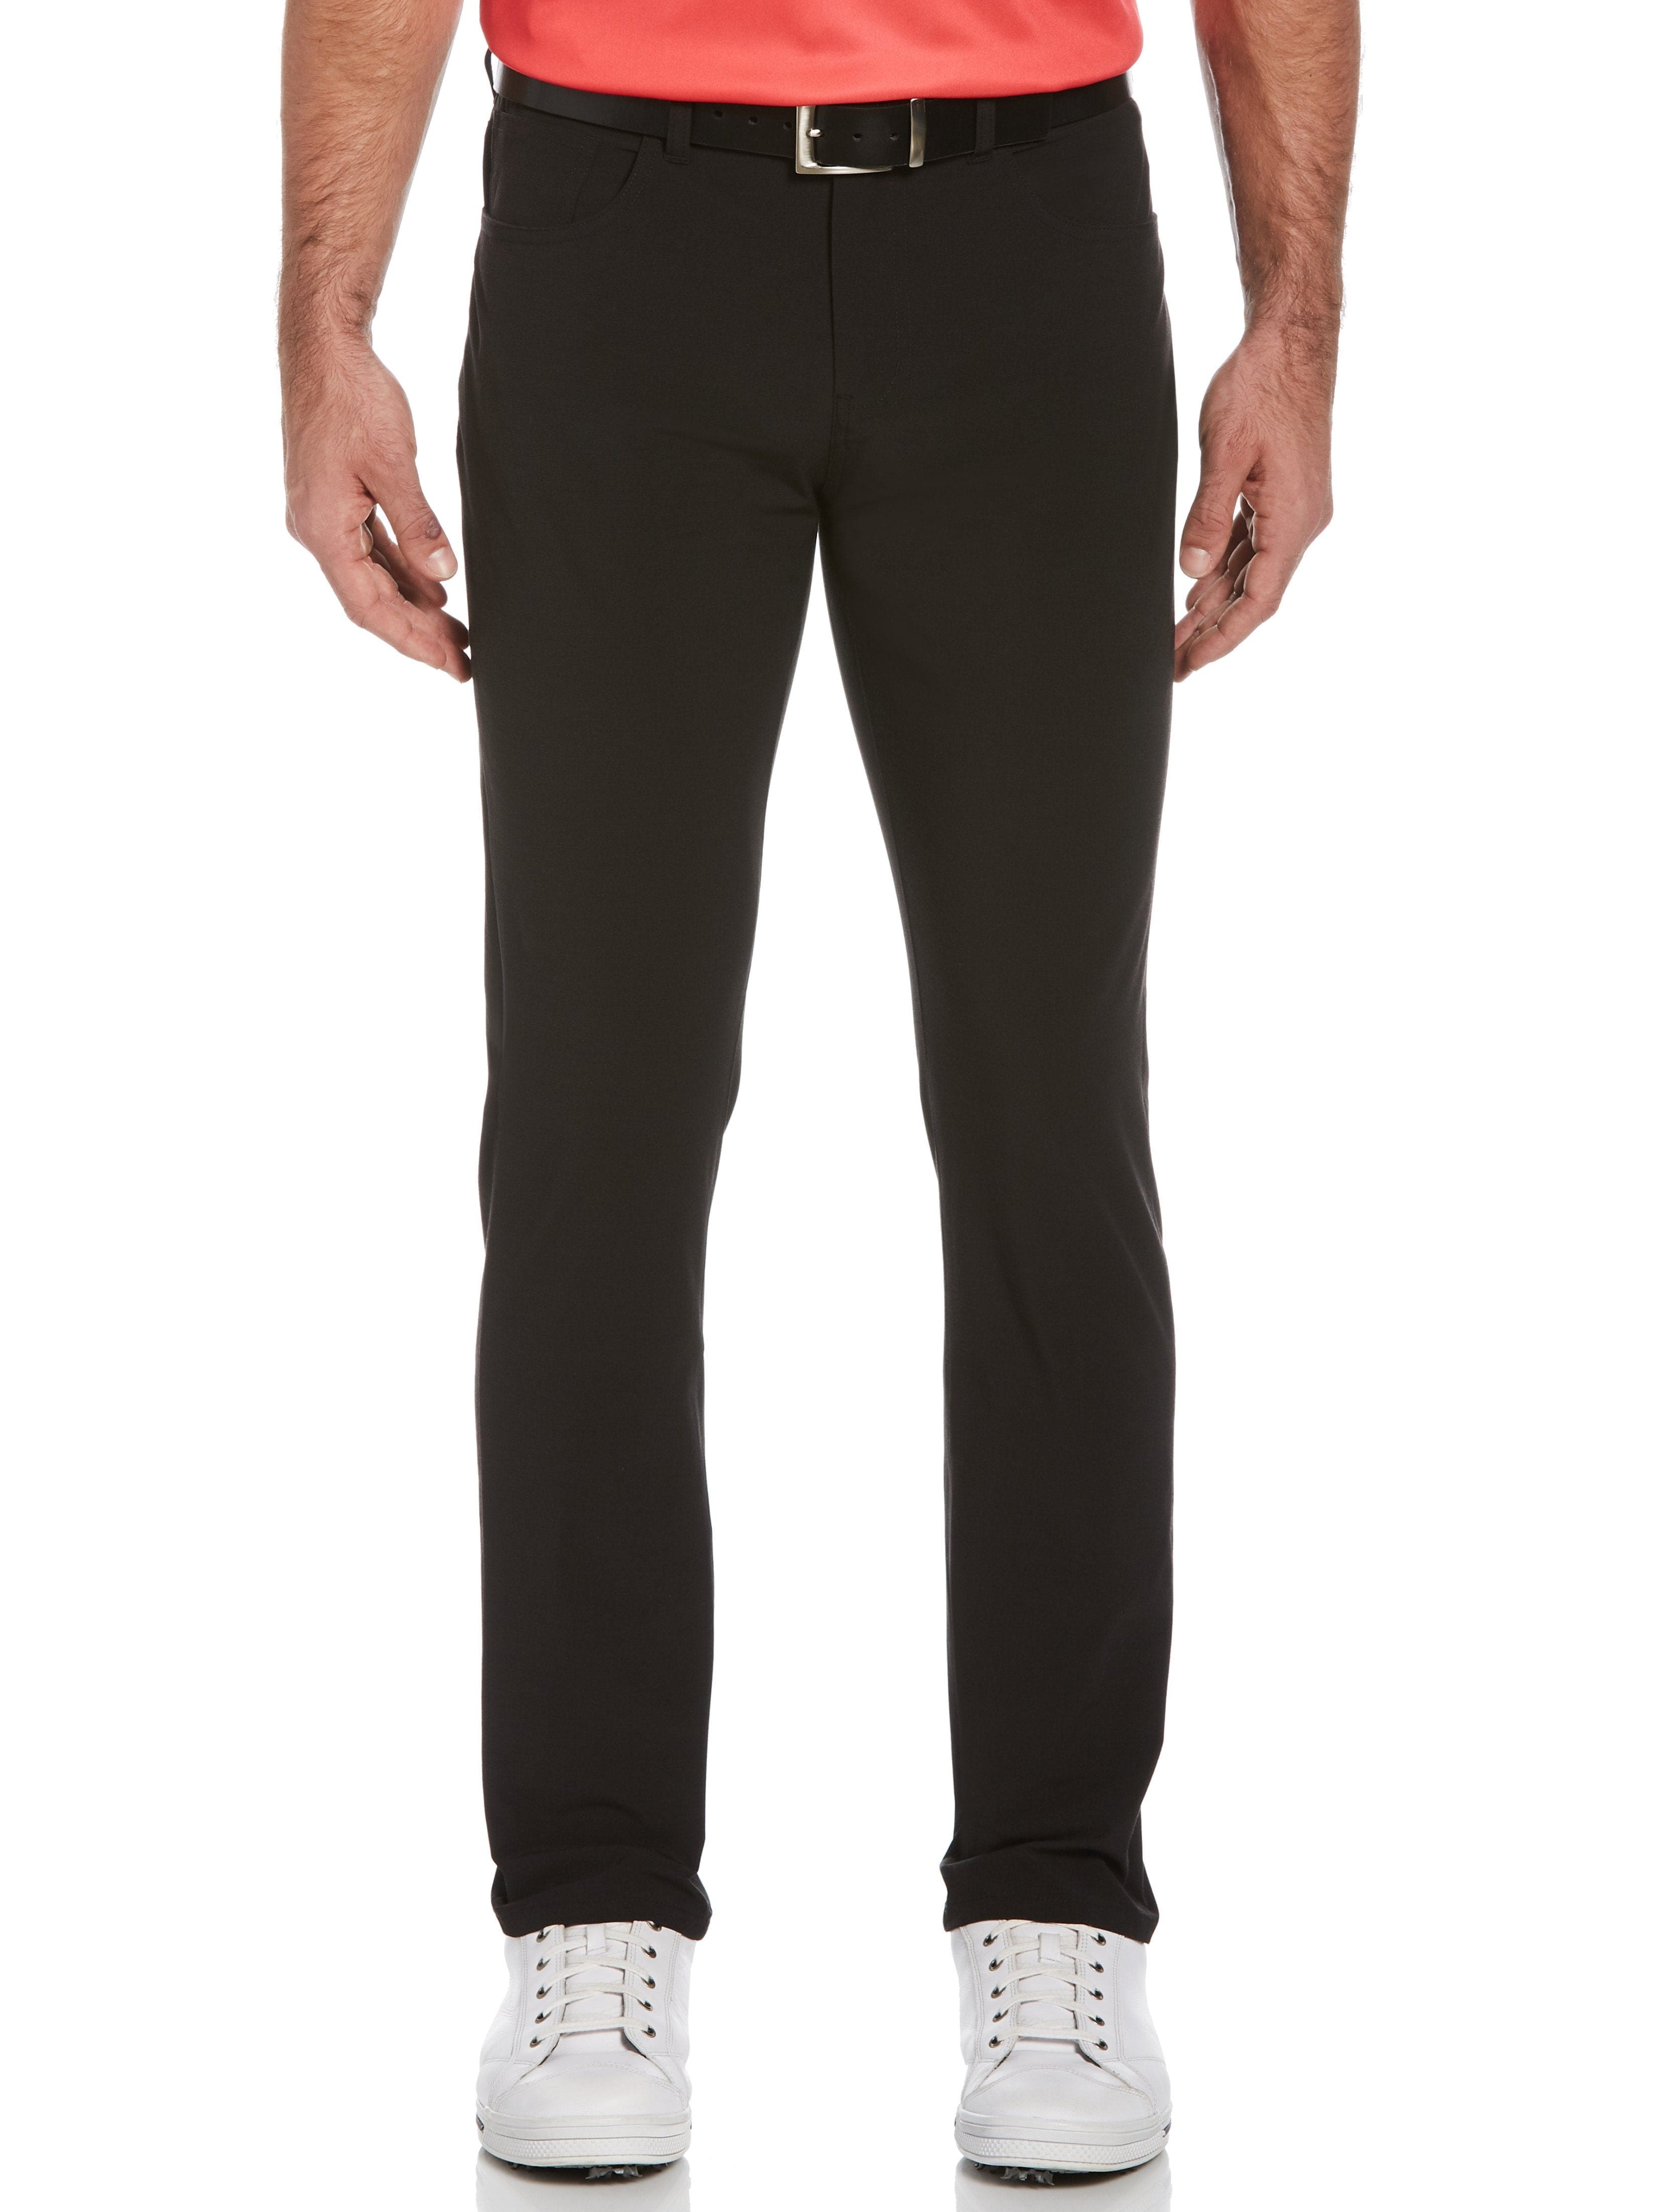 Jack Nicklaus Mens 5 Pocket Horizon Golf Pants, Size 36 x 34, Black Heather, Polyester/Cotton/Elastane | Golf Apparel Shop